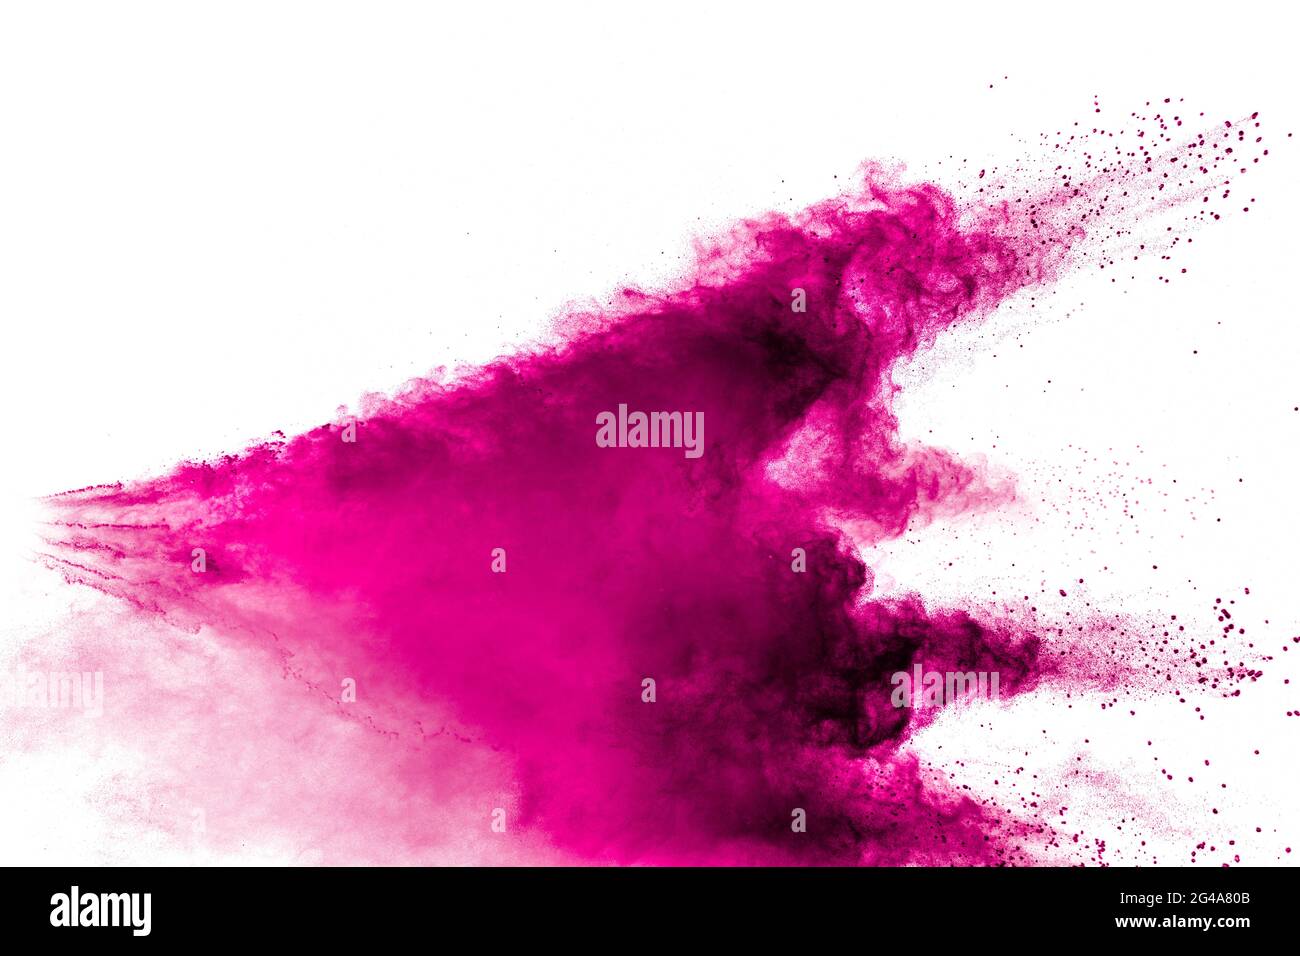 Abstract pink powder explosion on white background. Freeze motion of pink powder splash. Stock Photo